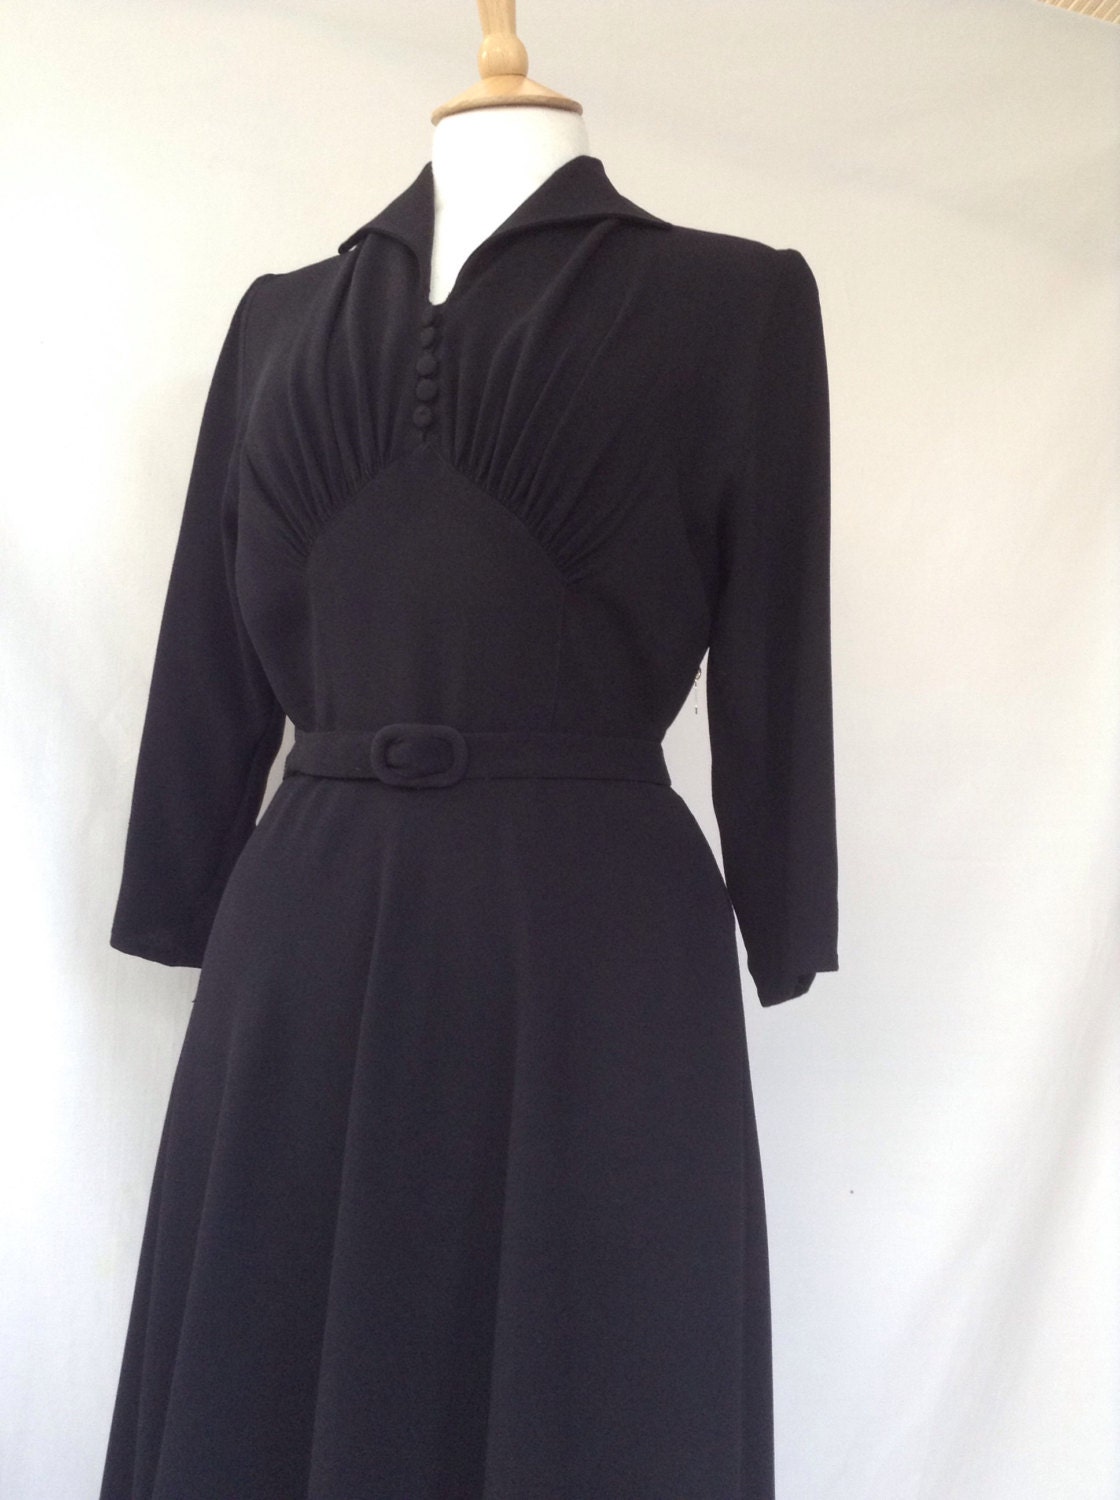 1940s Dress WW2 Black Formal Dinner Dance UK size 12 US